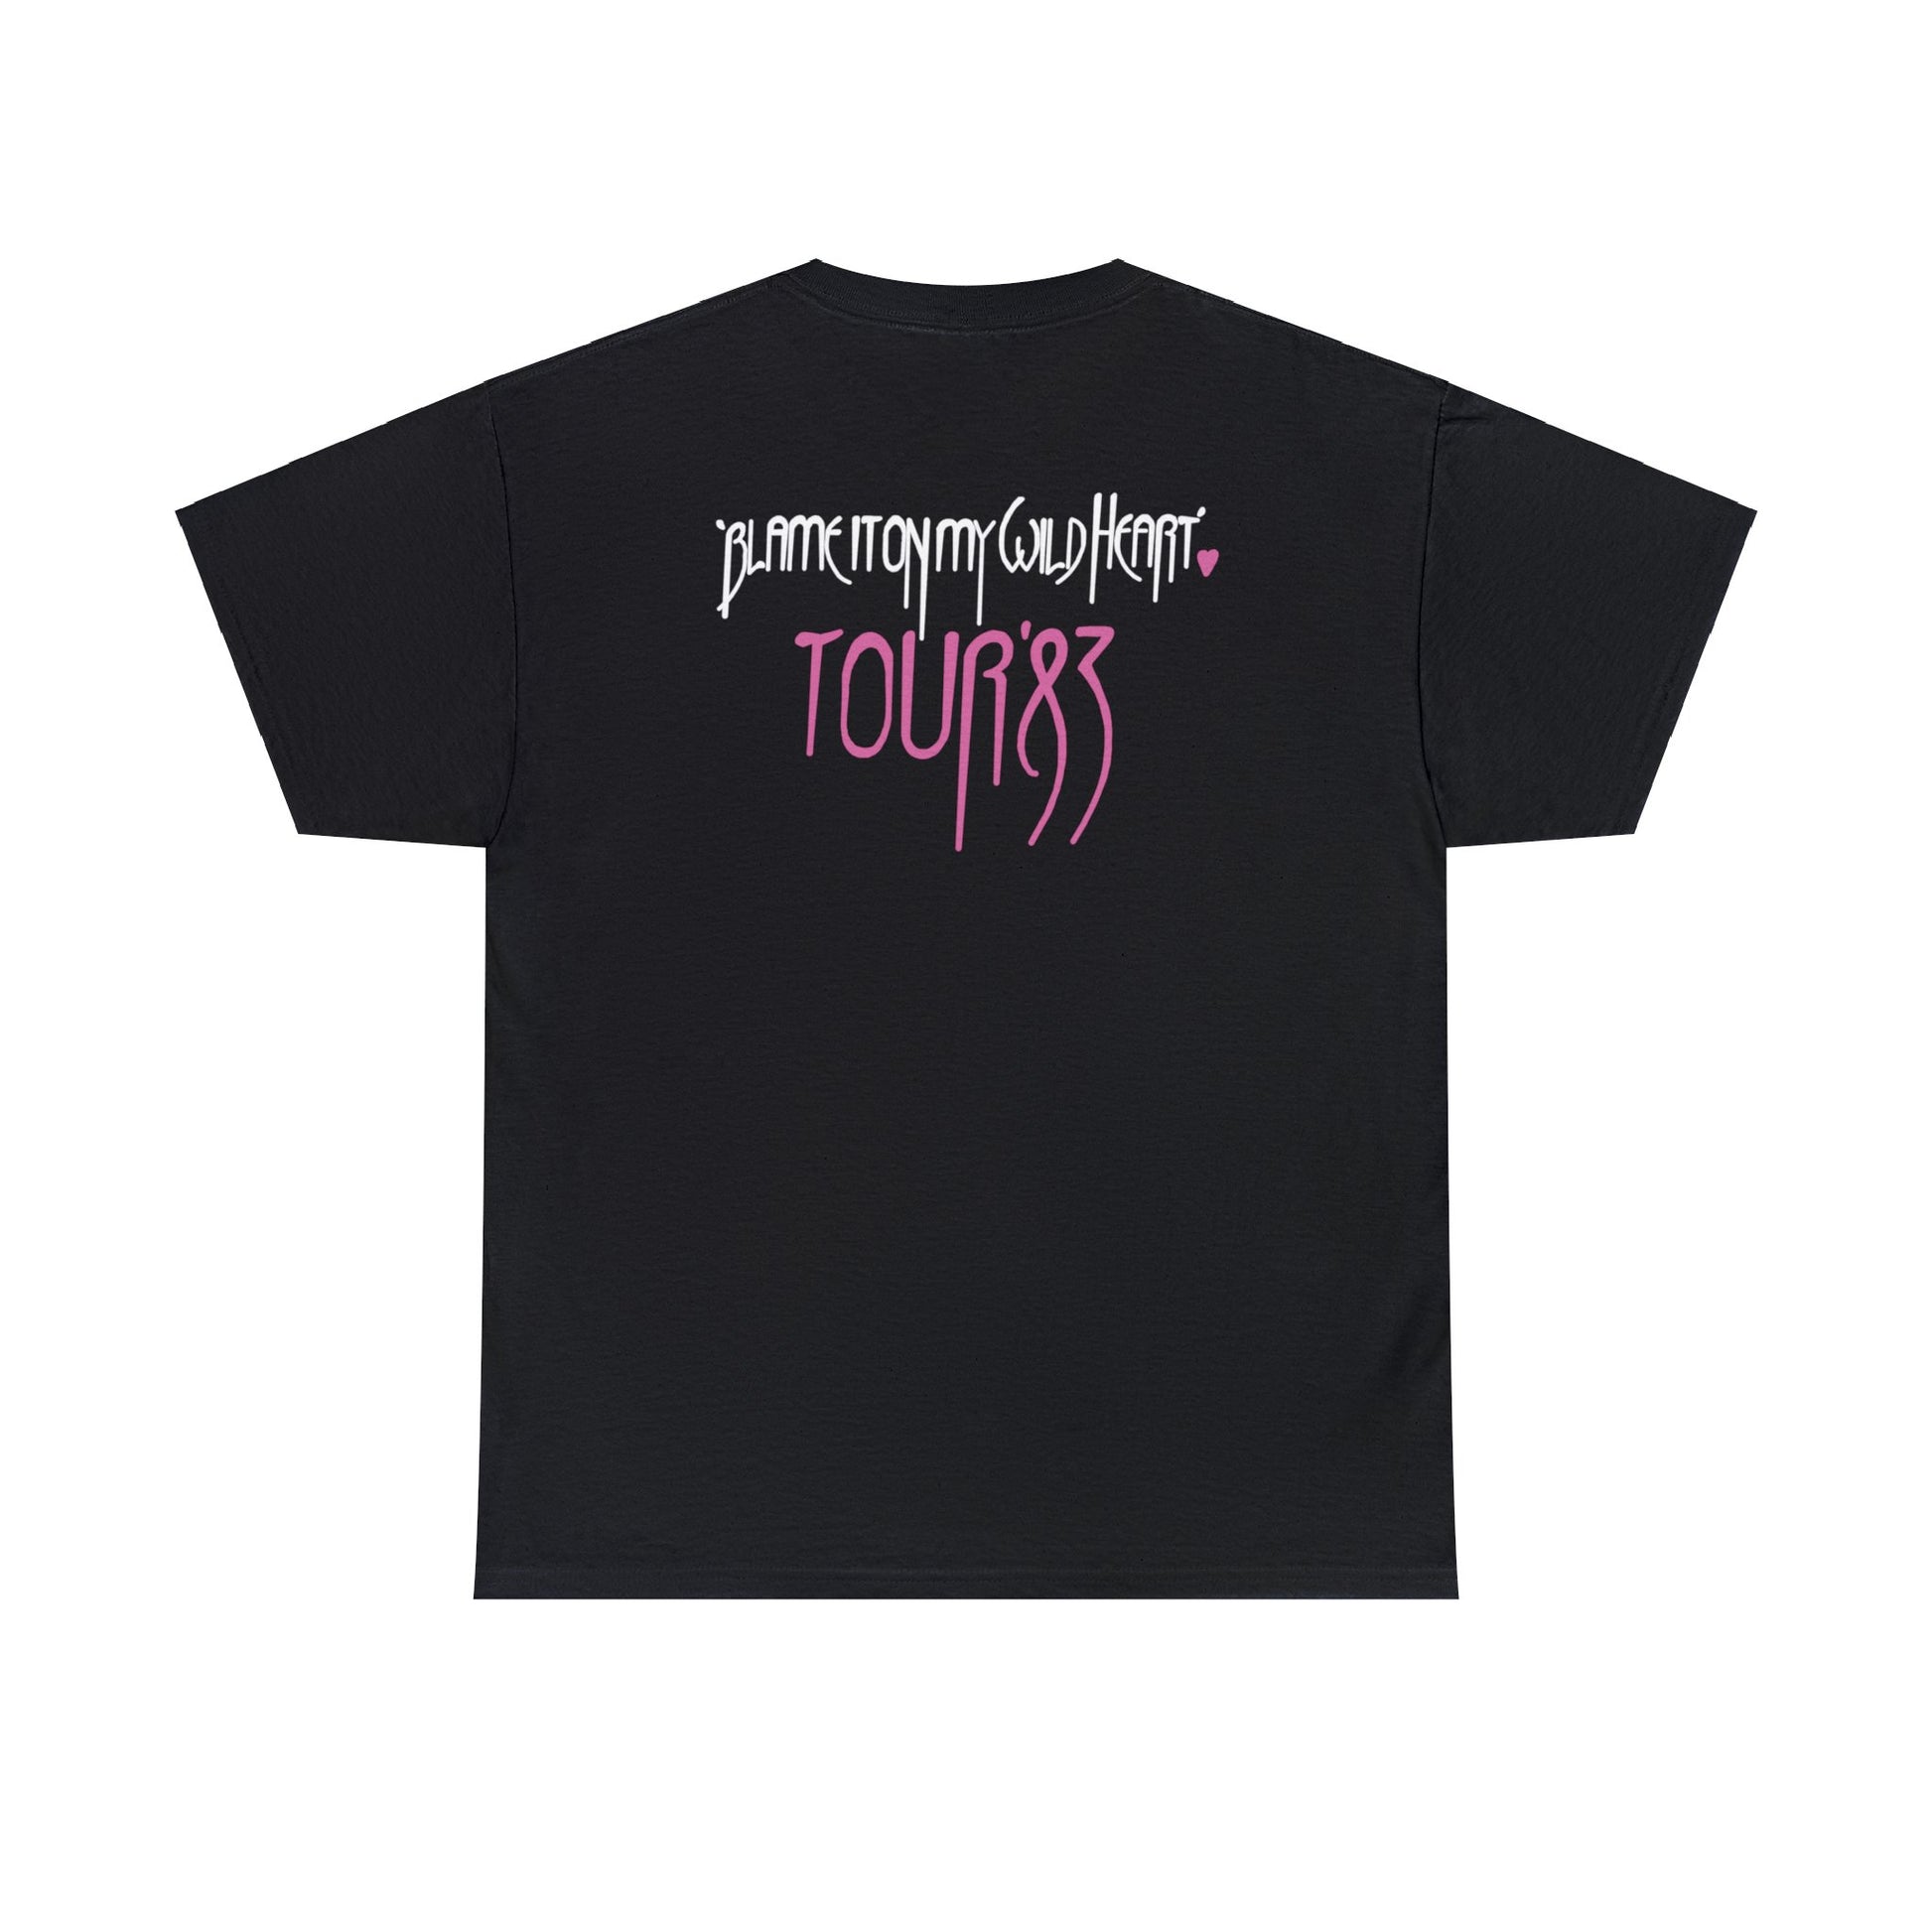 Stevie Nicks Concert Tour 1983 T-shirt for Sale